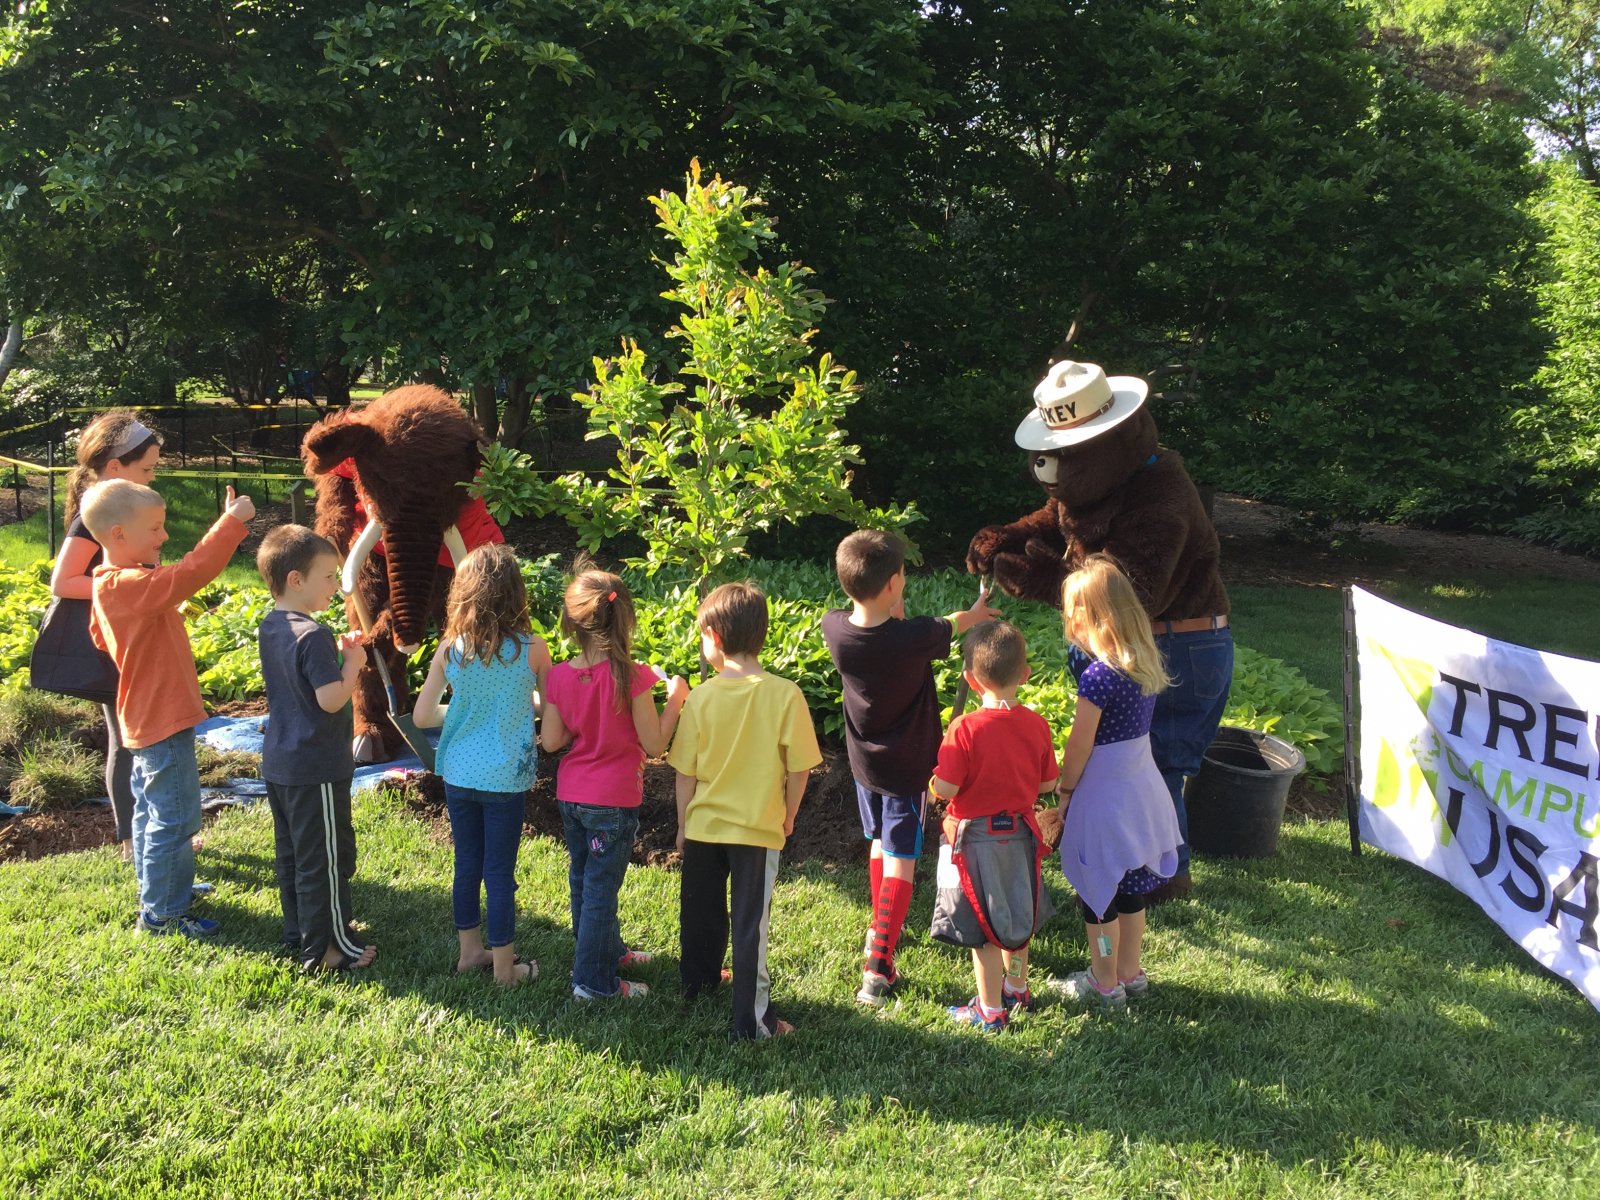 Children gather around newly planted tree and Smokey bear.